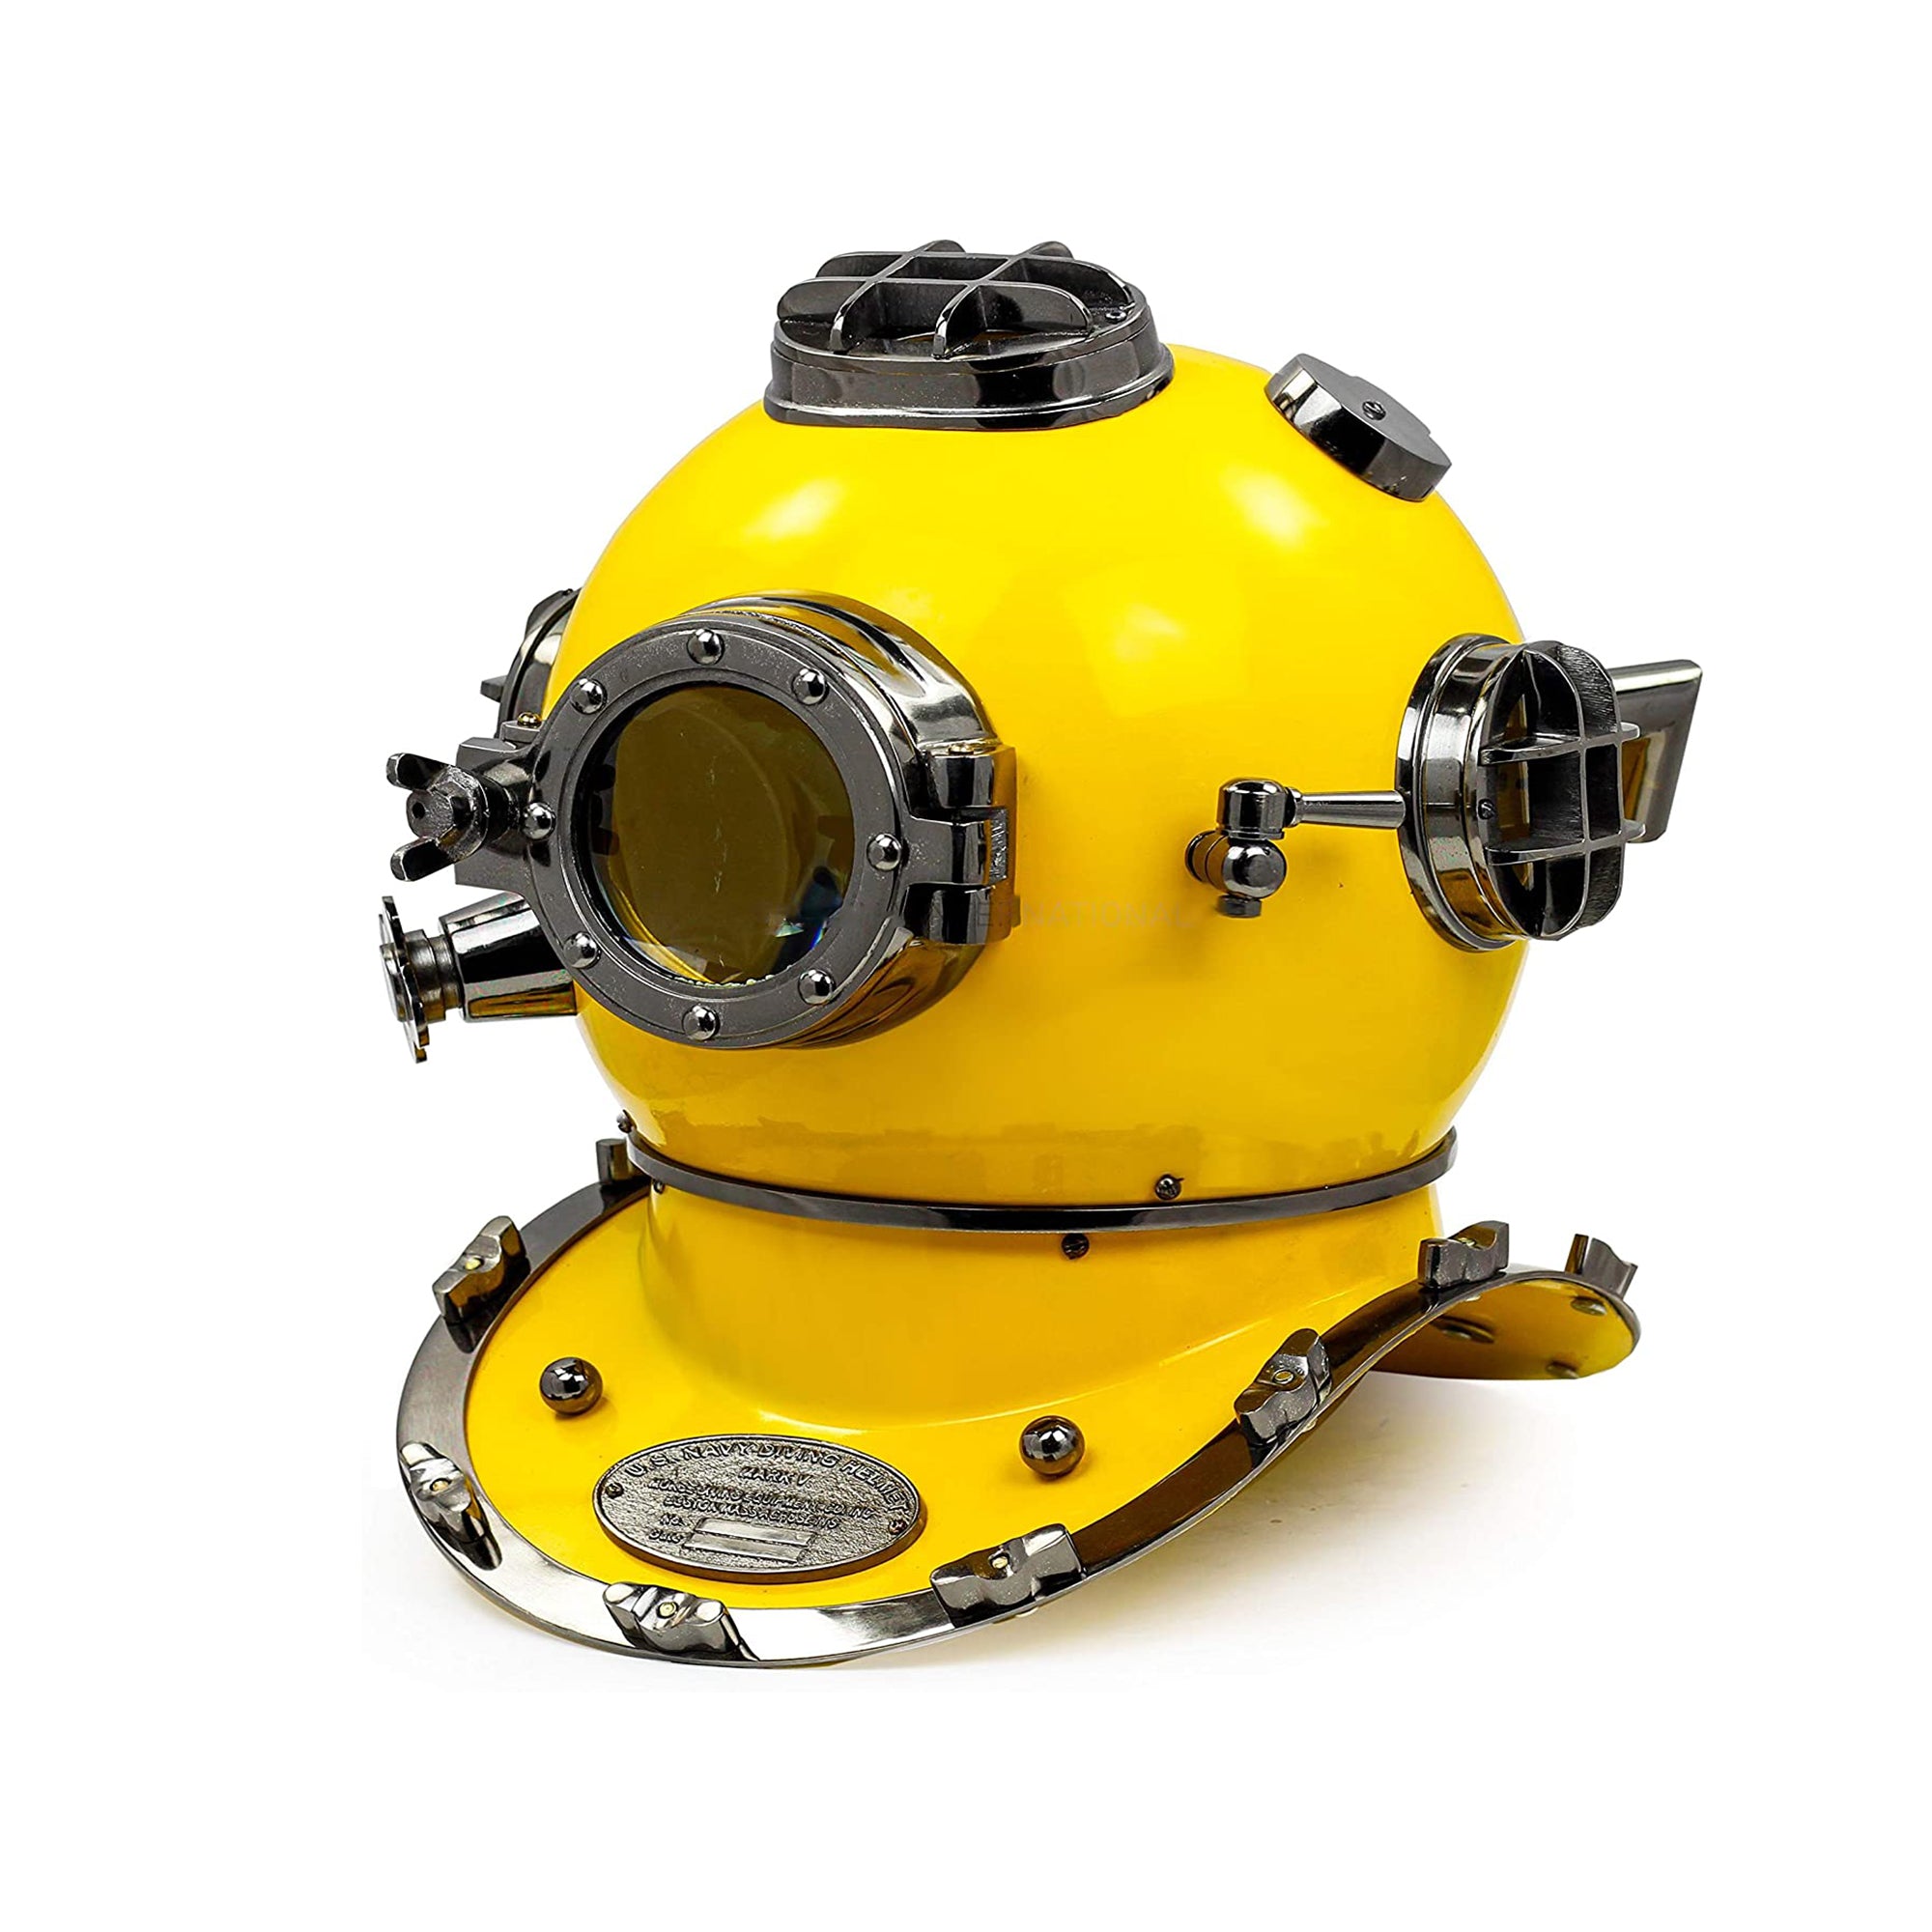 18" US Navy Scuba Diving Nautical Helmet | Maritime Ship's Decorative Yellow Cobalt Premium Snorkeling Helmets (18 Inches, Yellow Cobalt)